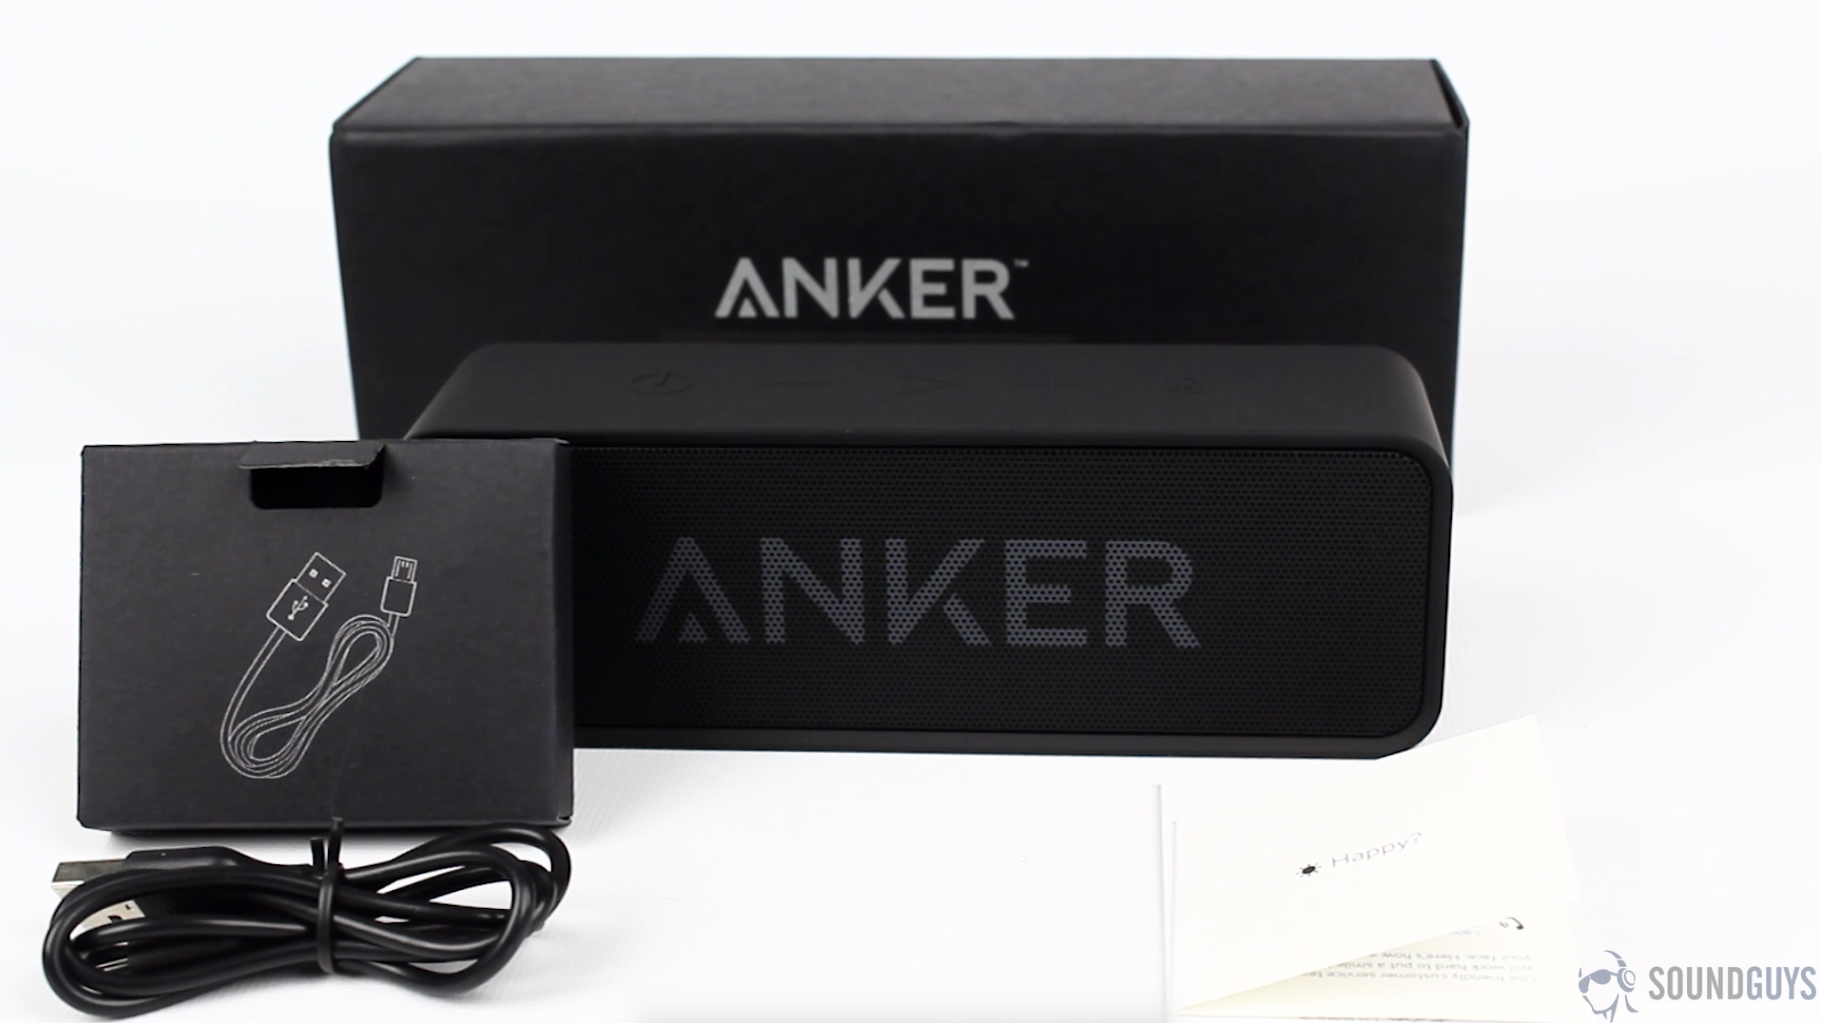 Anker Soundcore review unit package